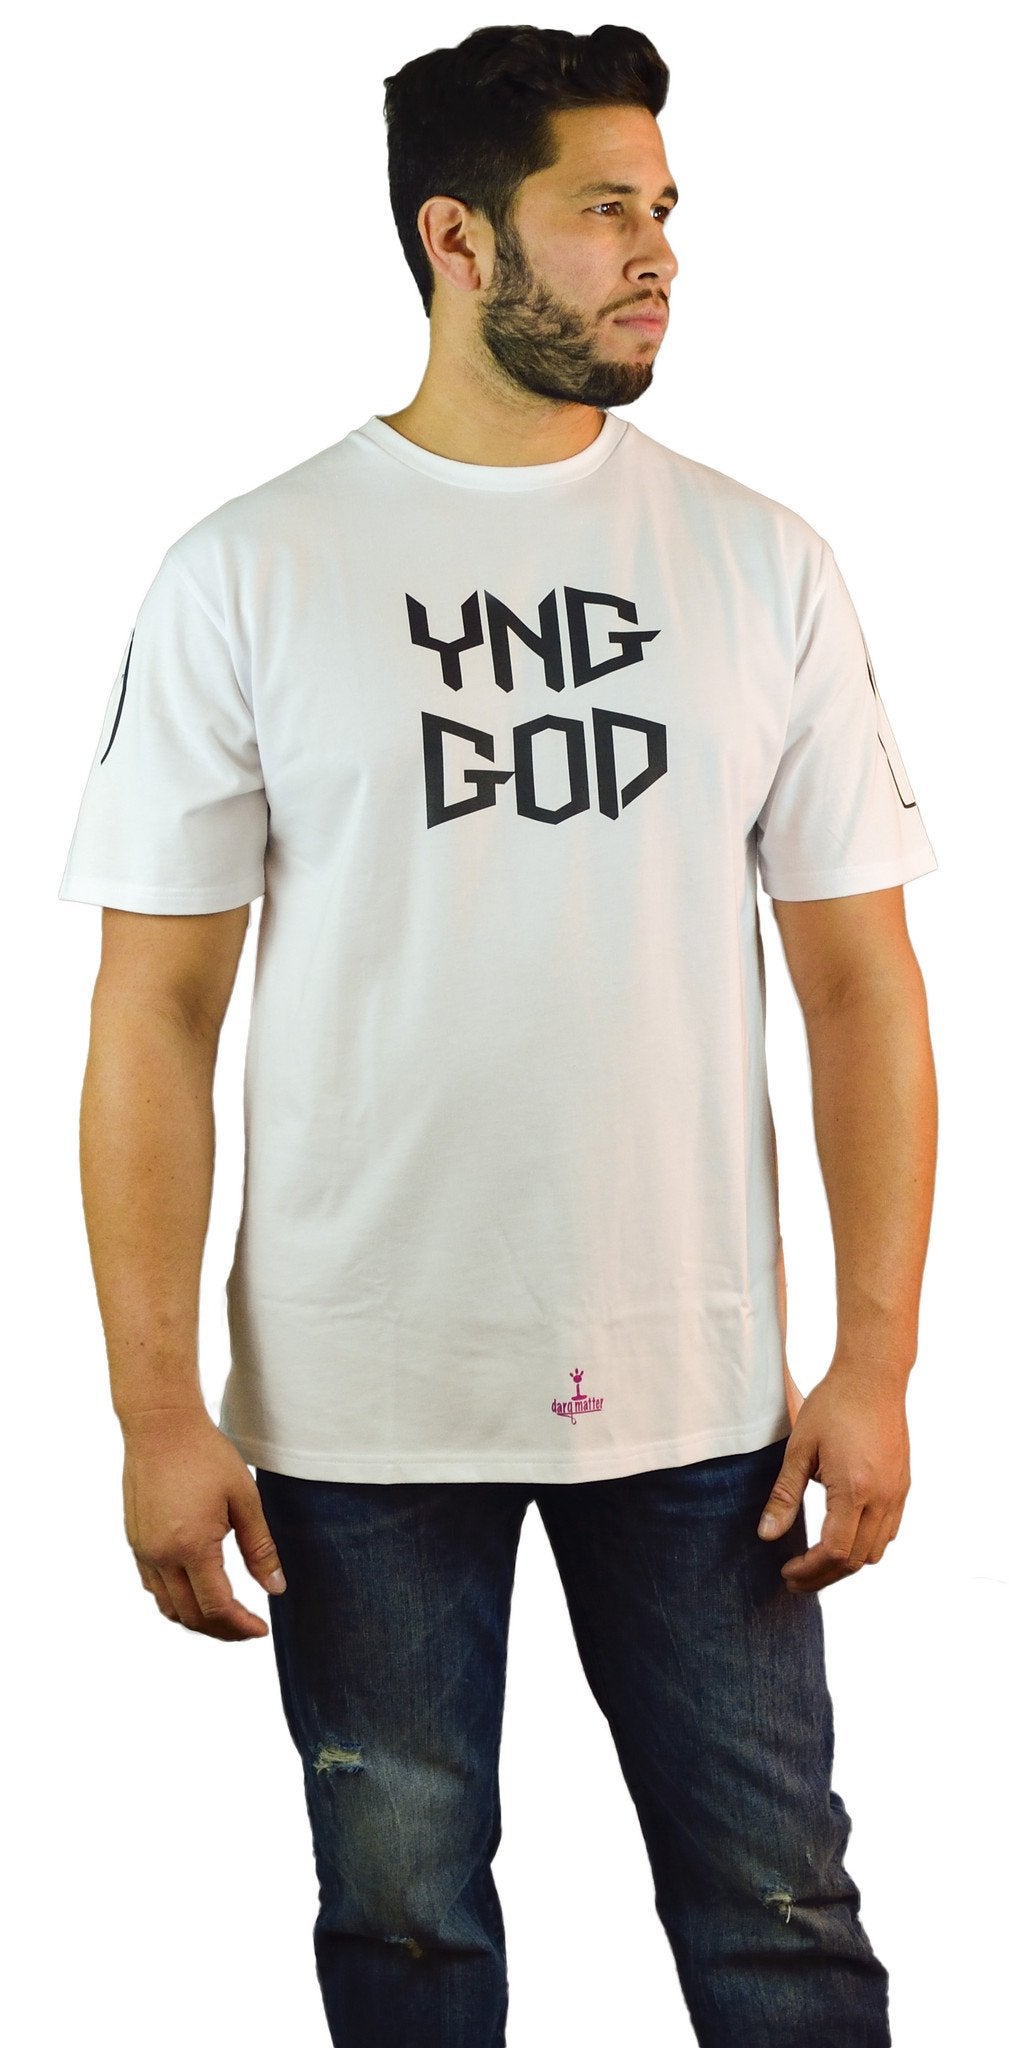 DarqMatterDesign CutnSew T-Shirts Small / White Yng God